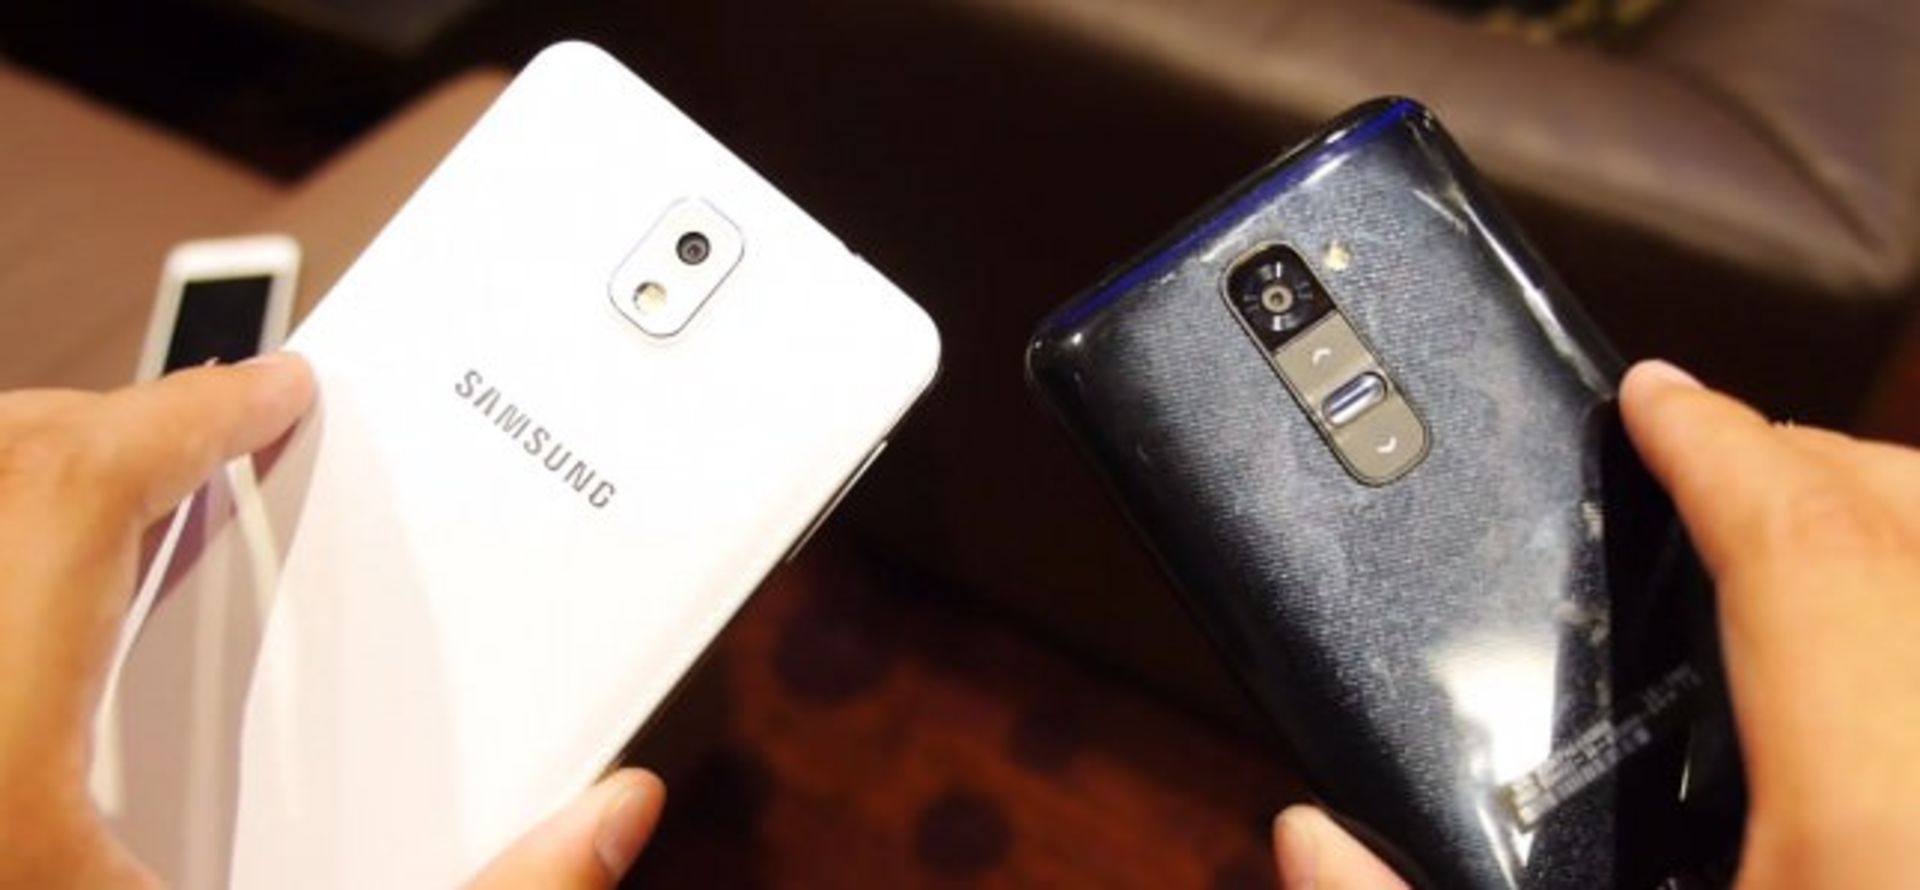 Samsung-Galaxy-Note-3-vs-LG-G2-rear-2-645x299